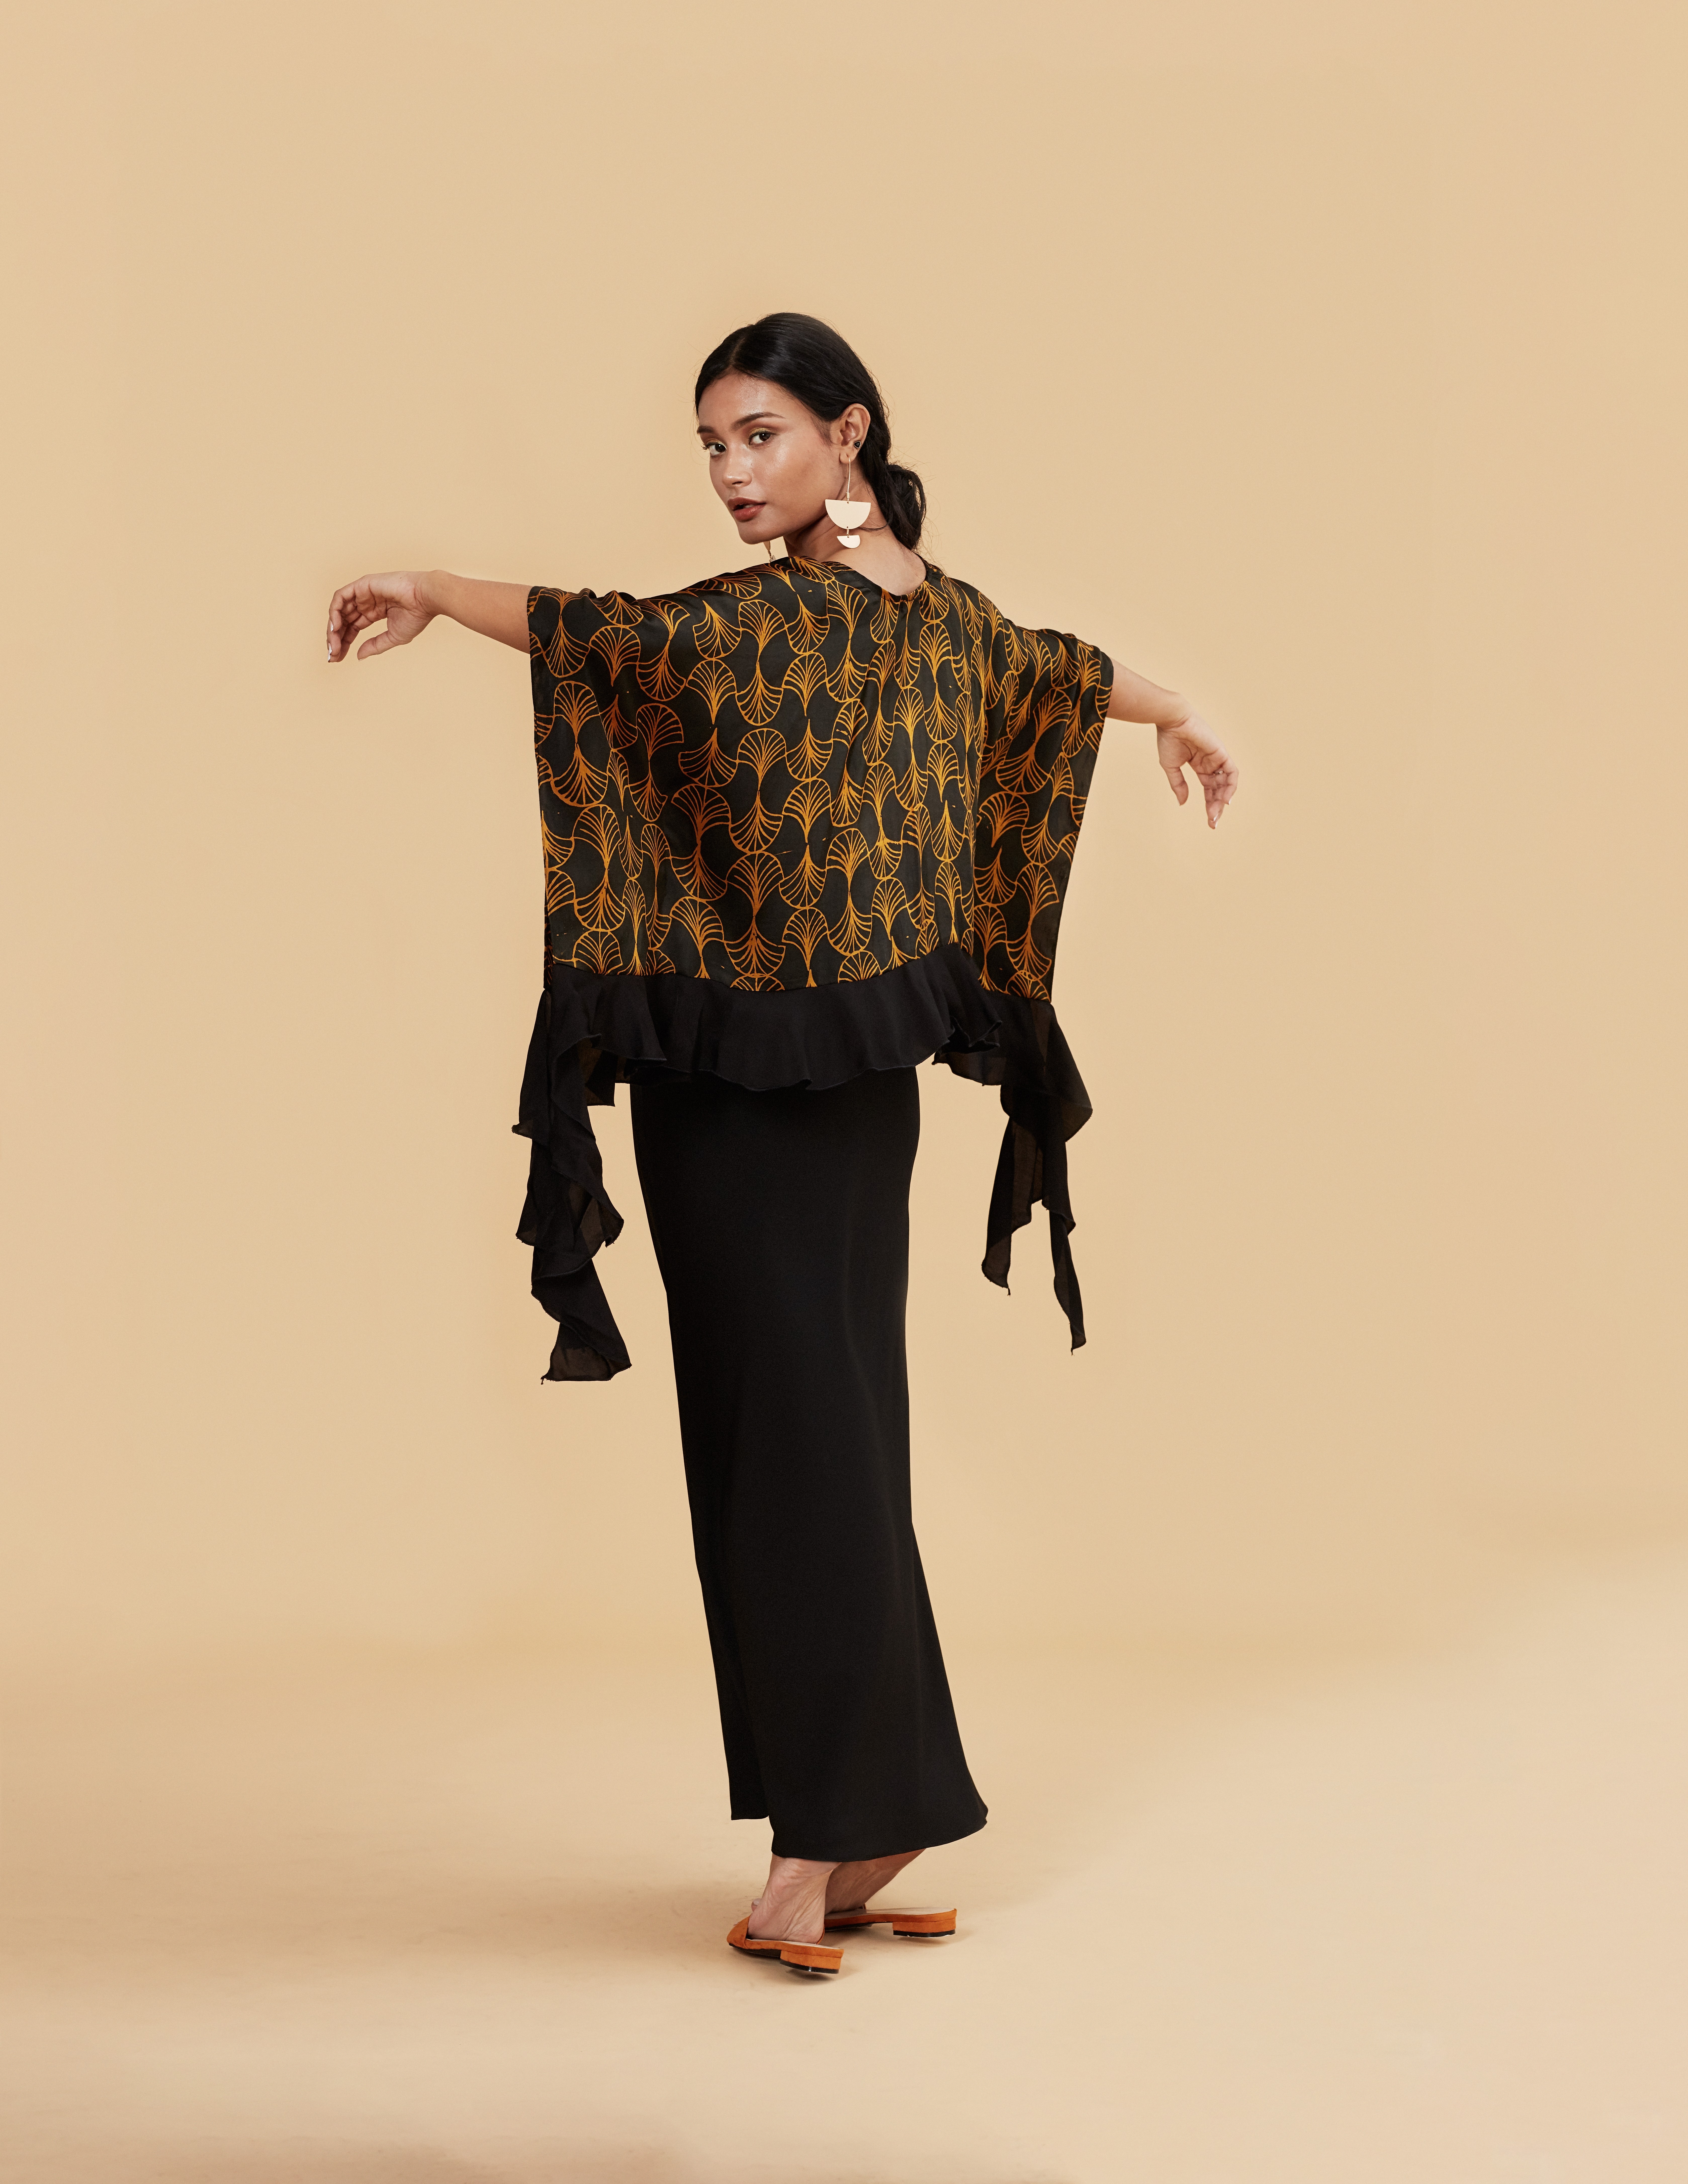 A women's look from Fern, made using batik techniques.